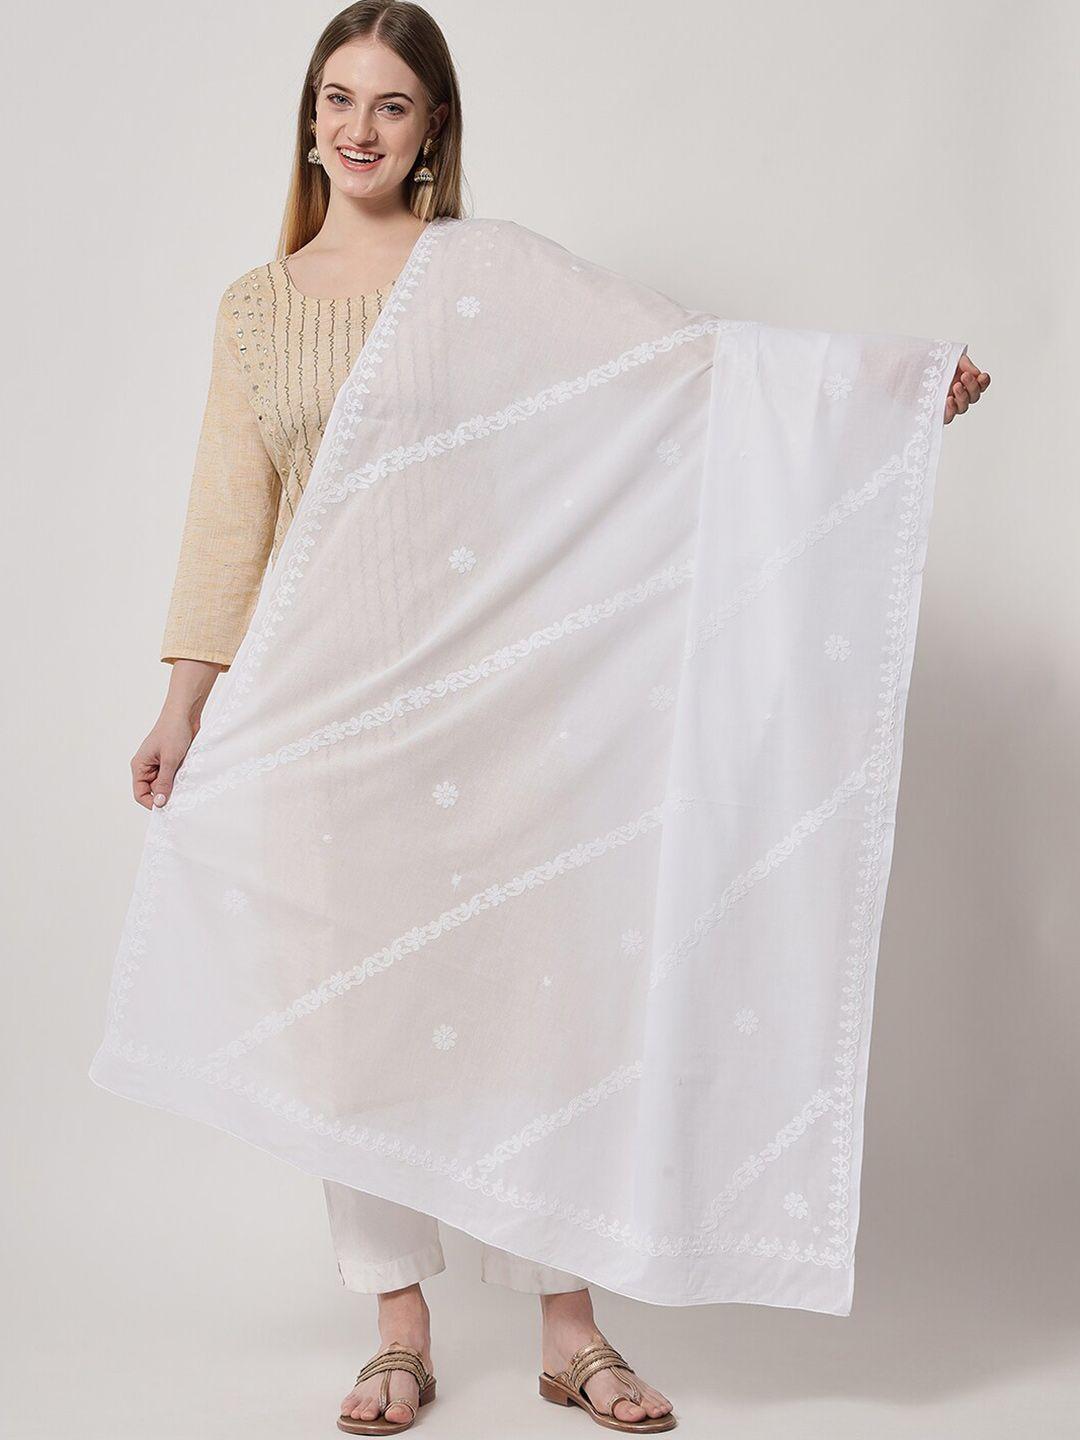 paramount-chikan-white-ethnic-motifs-embroidered-pure-cotton-dupatta-with-chikankari